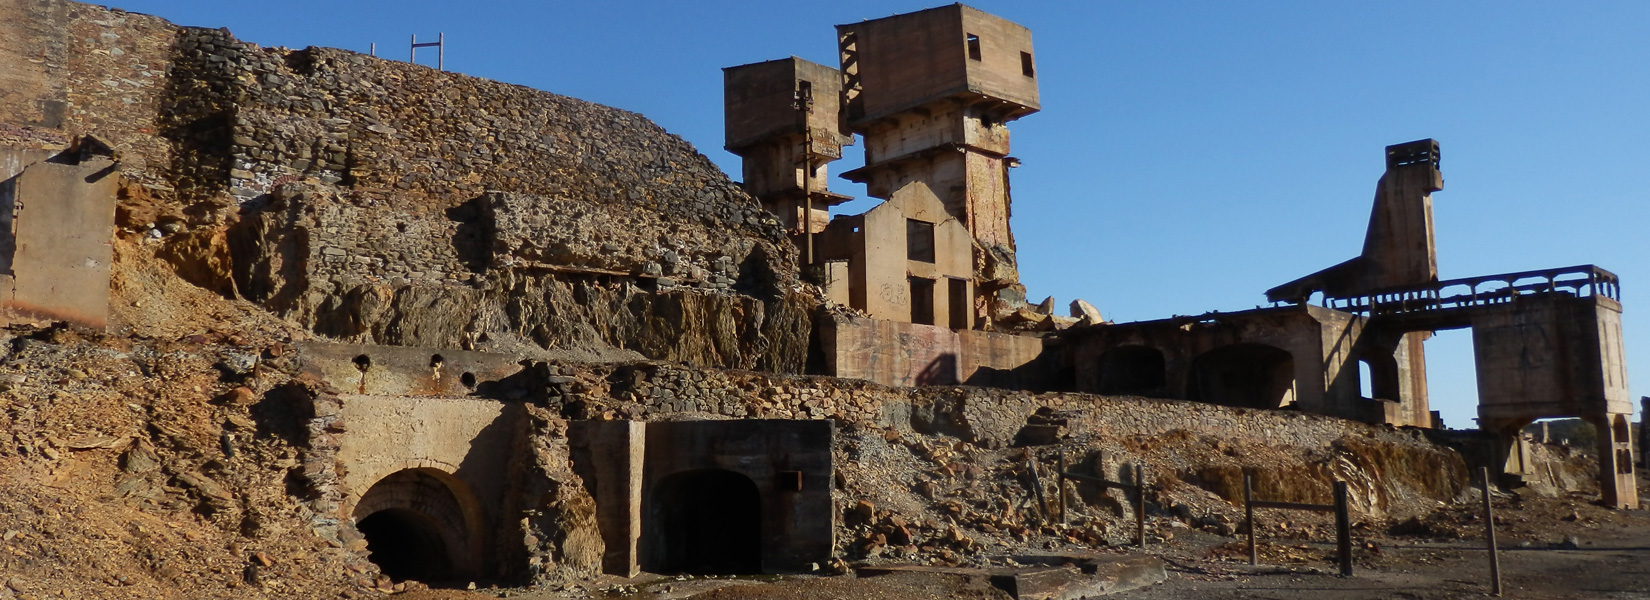 The abandoned mine of Achada do Gamo